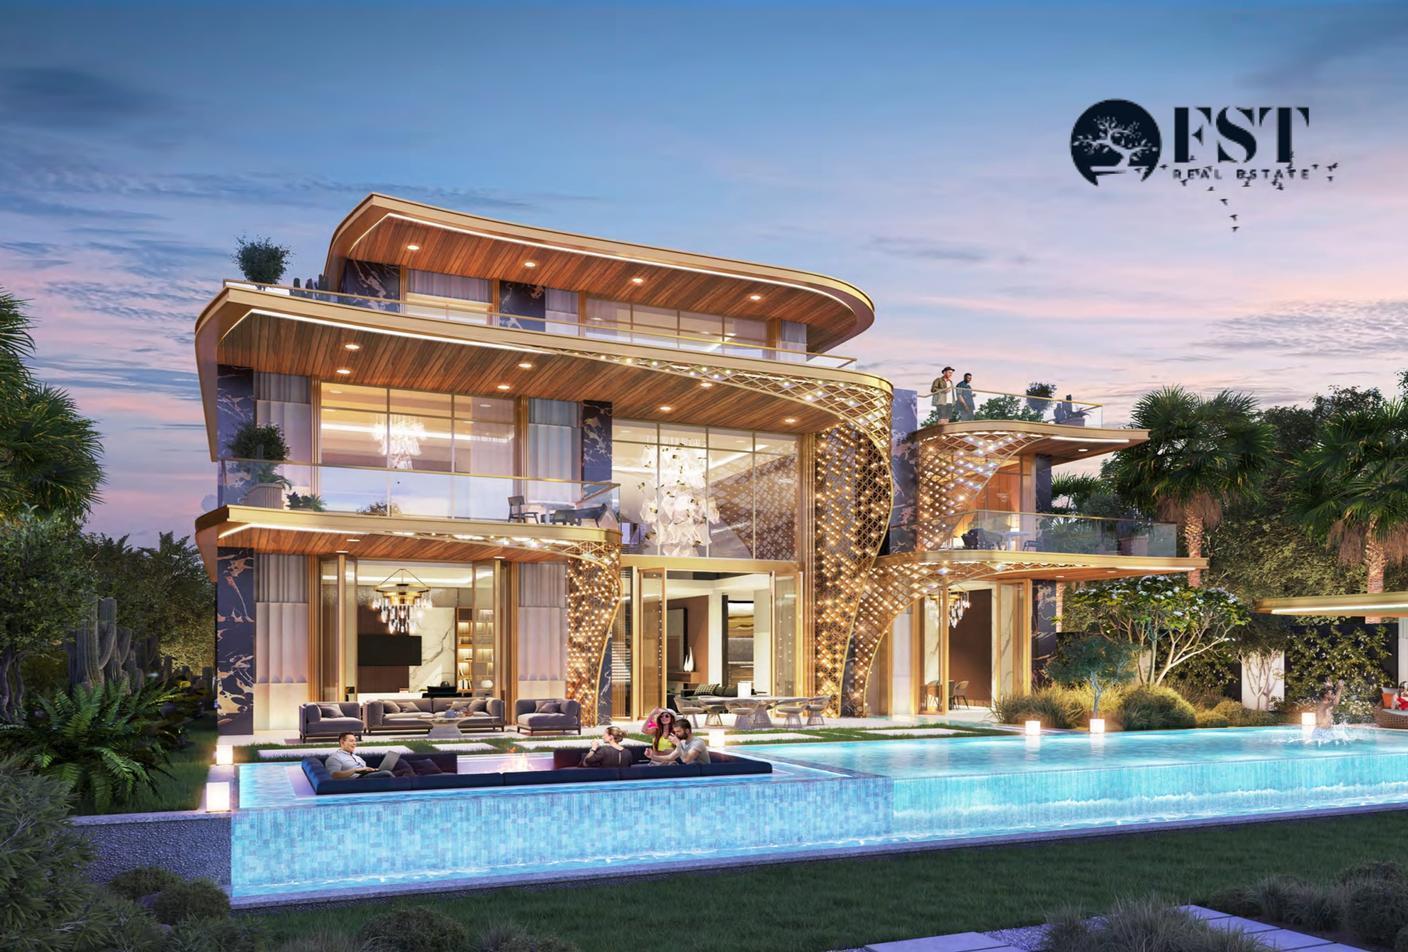 5 bed, 6 bath Villa for sale in Belair Damac Hills - By Trump Estates, DAMAC Hills, Dubai for price AED 5700000 